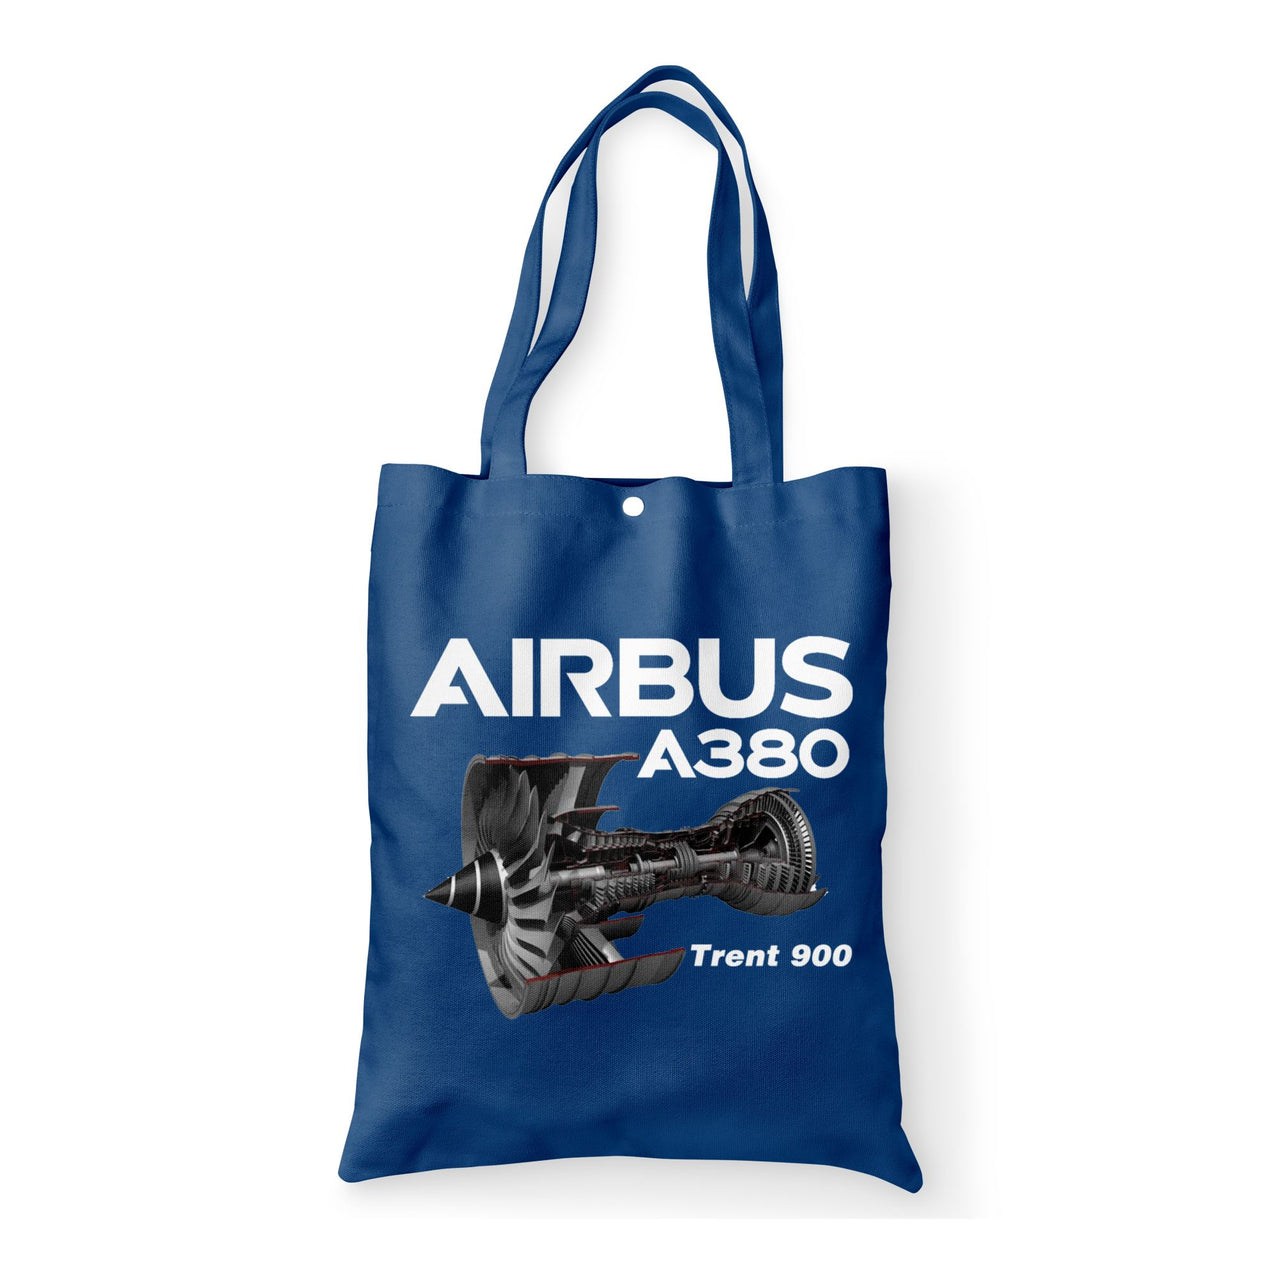 Airbus A380 & Trent 900 Engine Designed Tote Bags